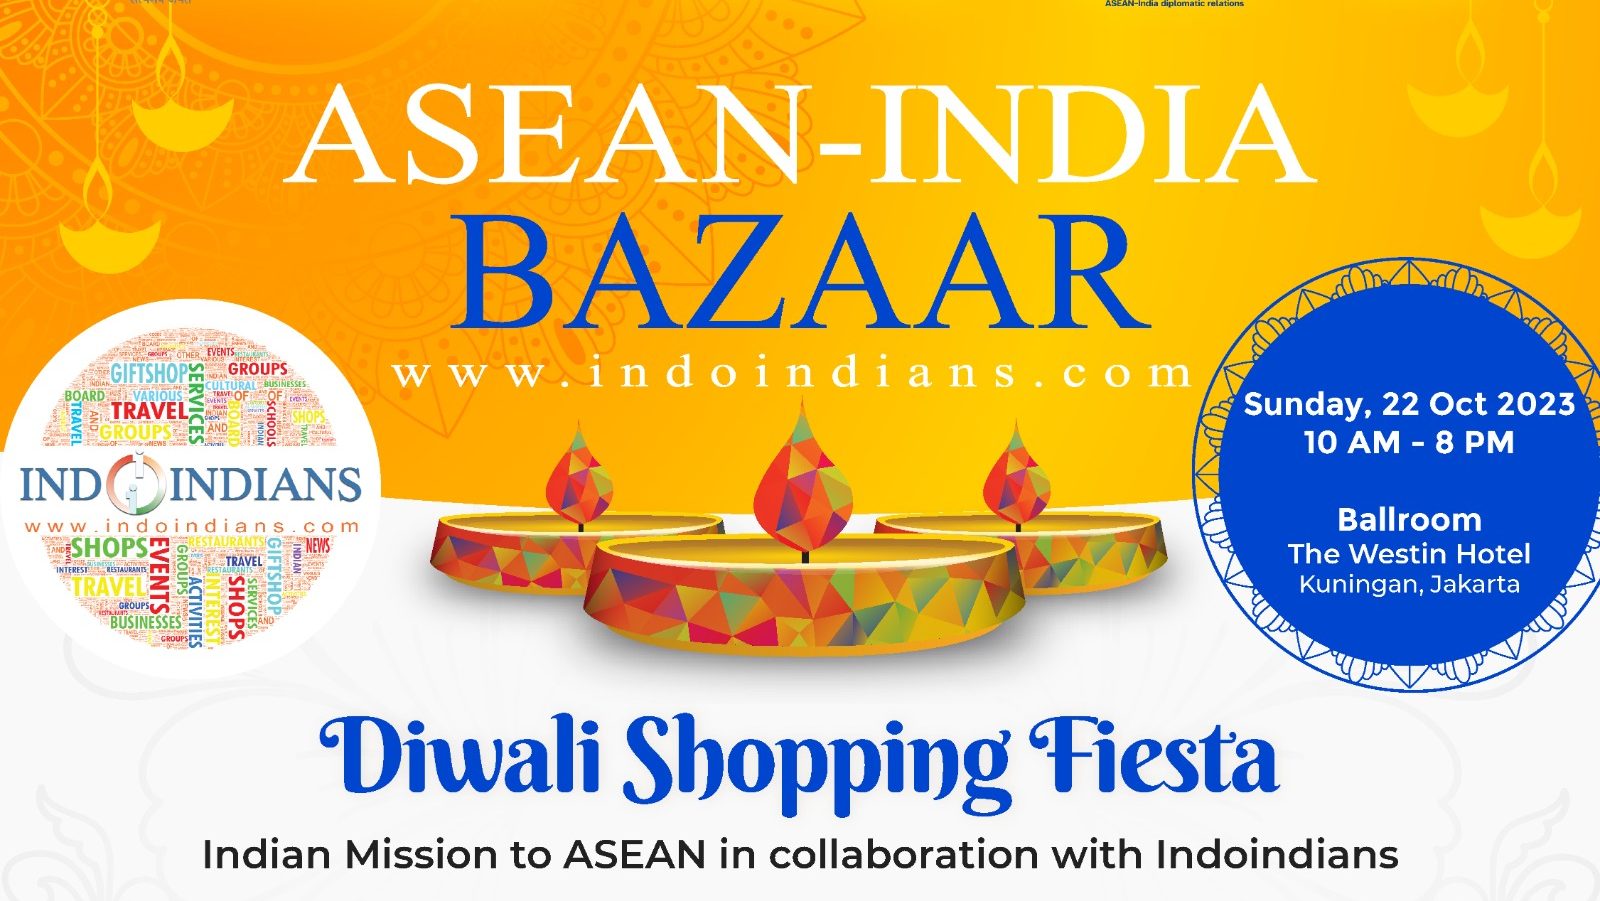 ASEAN-India-Bazaar-Sunday-22-Oct-2023-at-The-Westin-Hotel-Jakarta